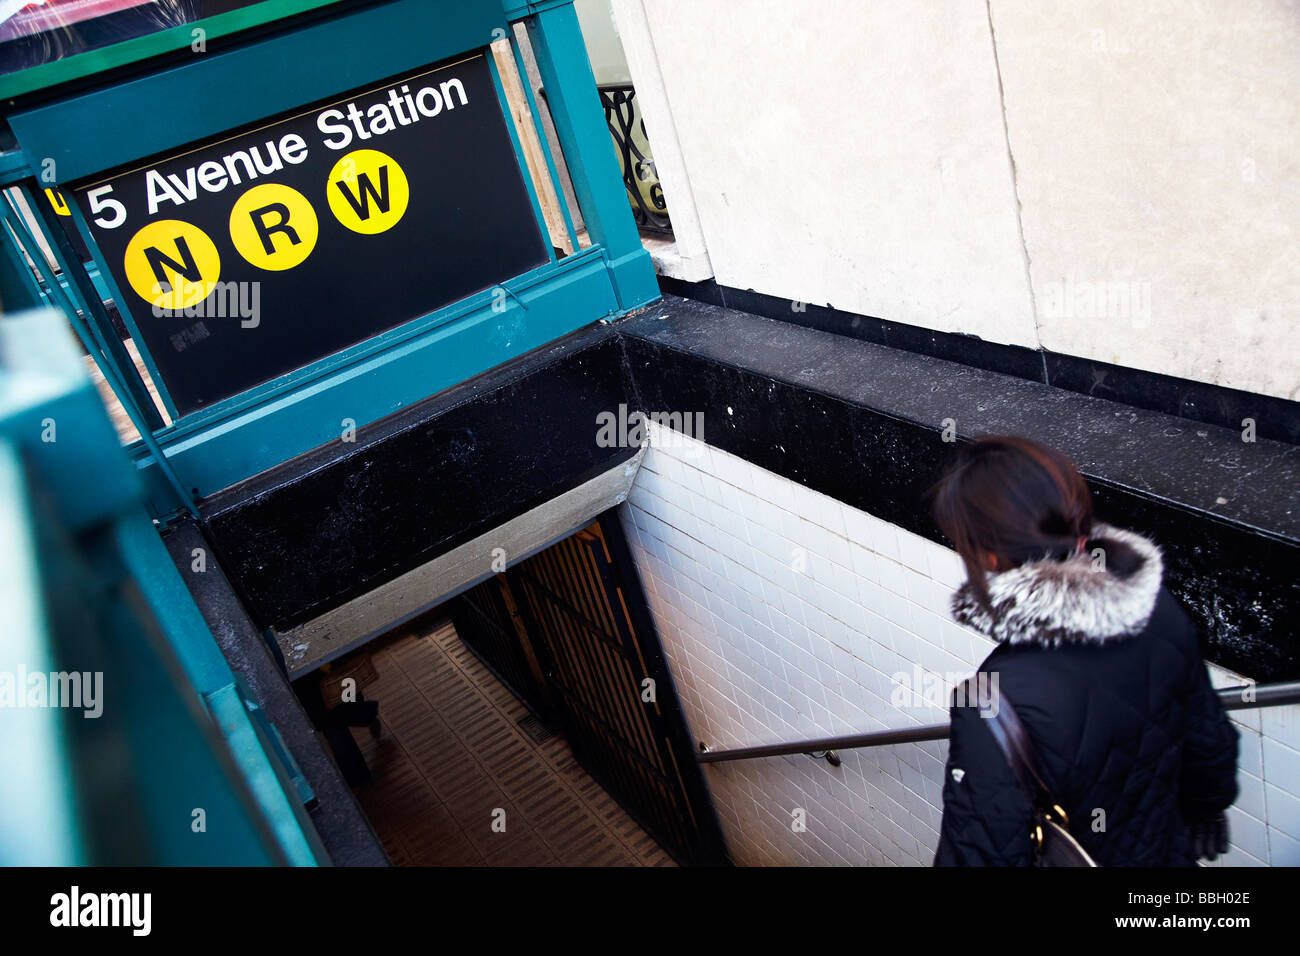 5th Avenue Station, New York subway Stock Photo